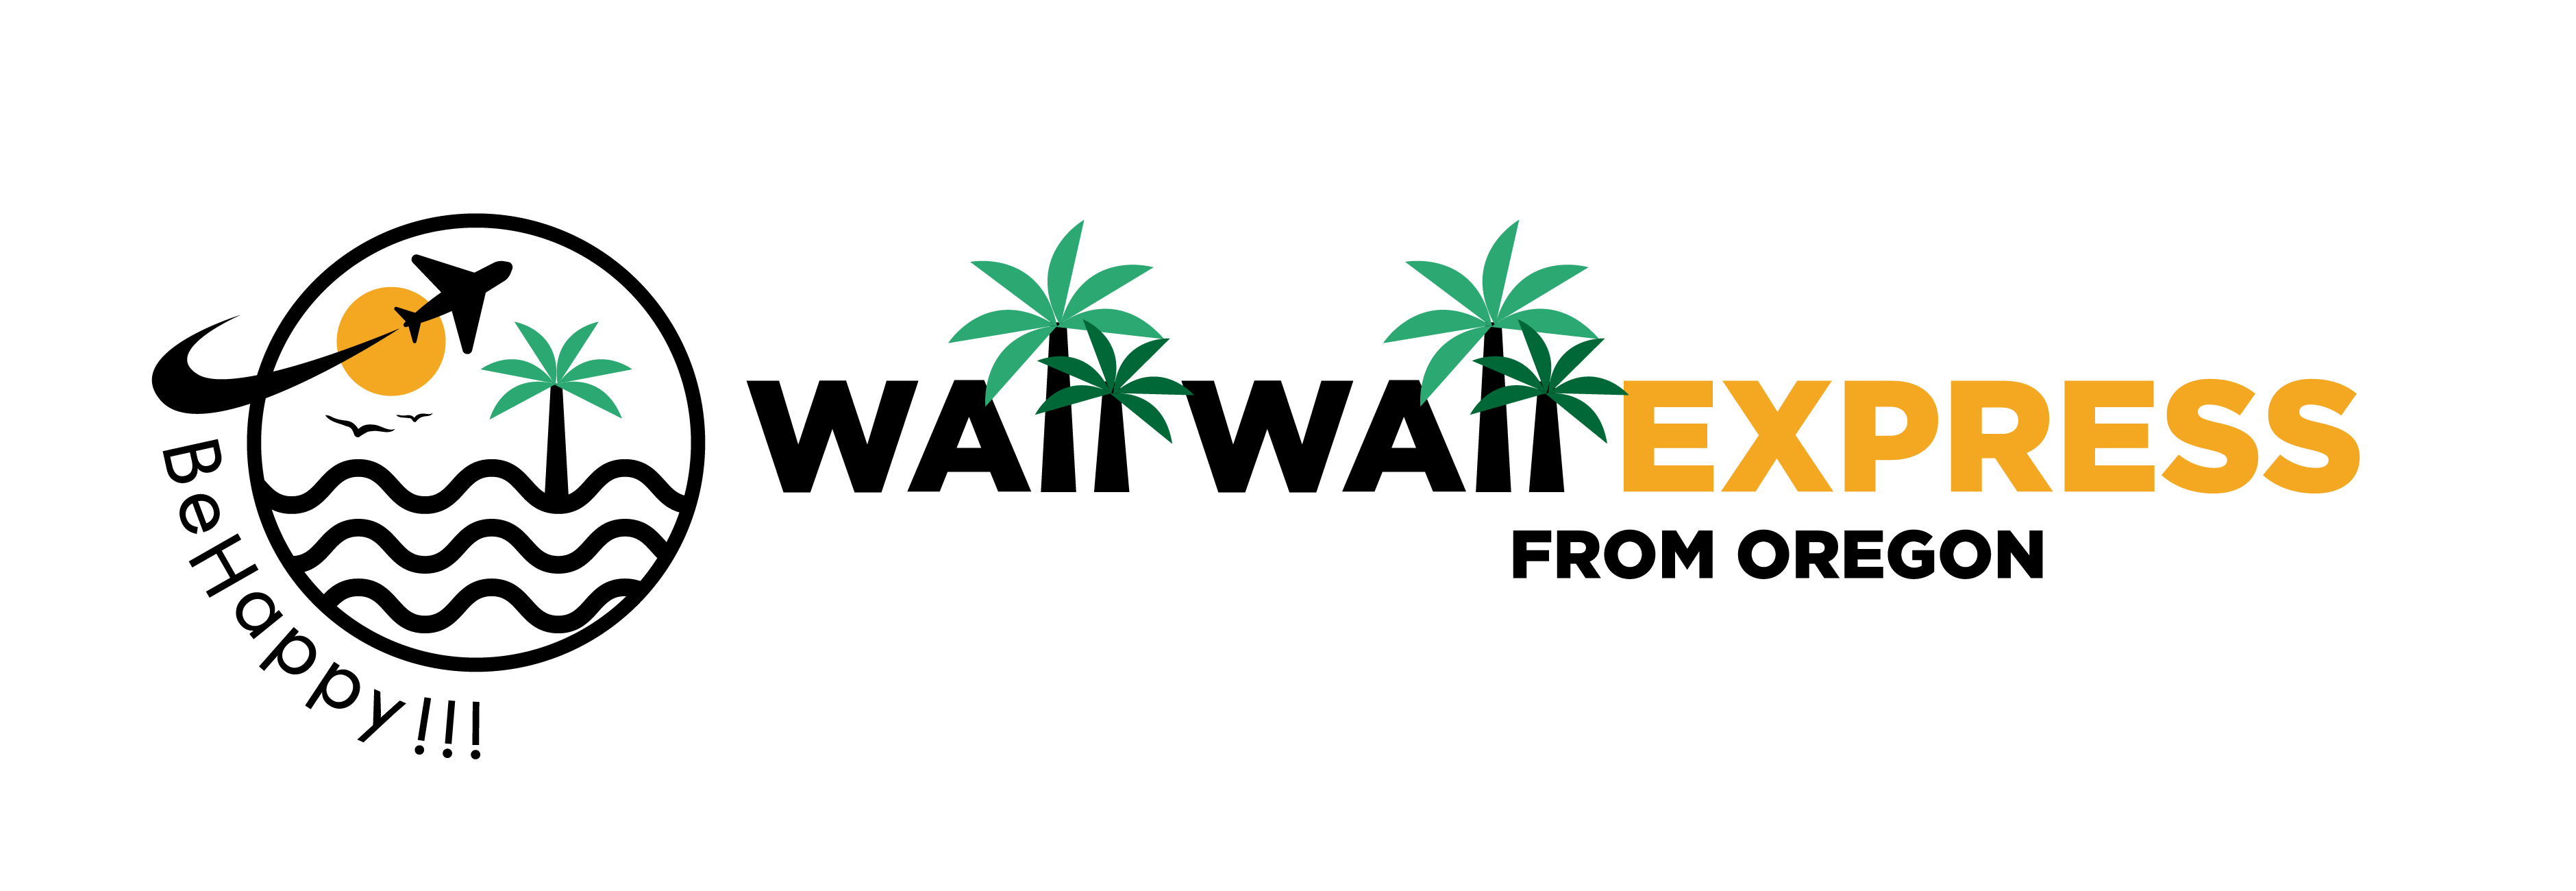 waiwai-express-logo-horizontal